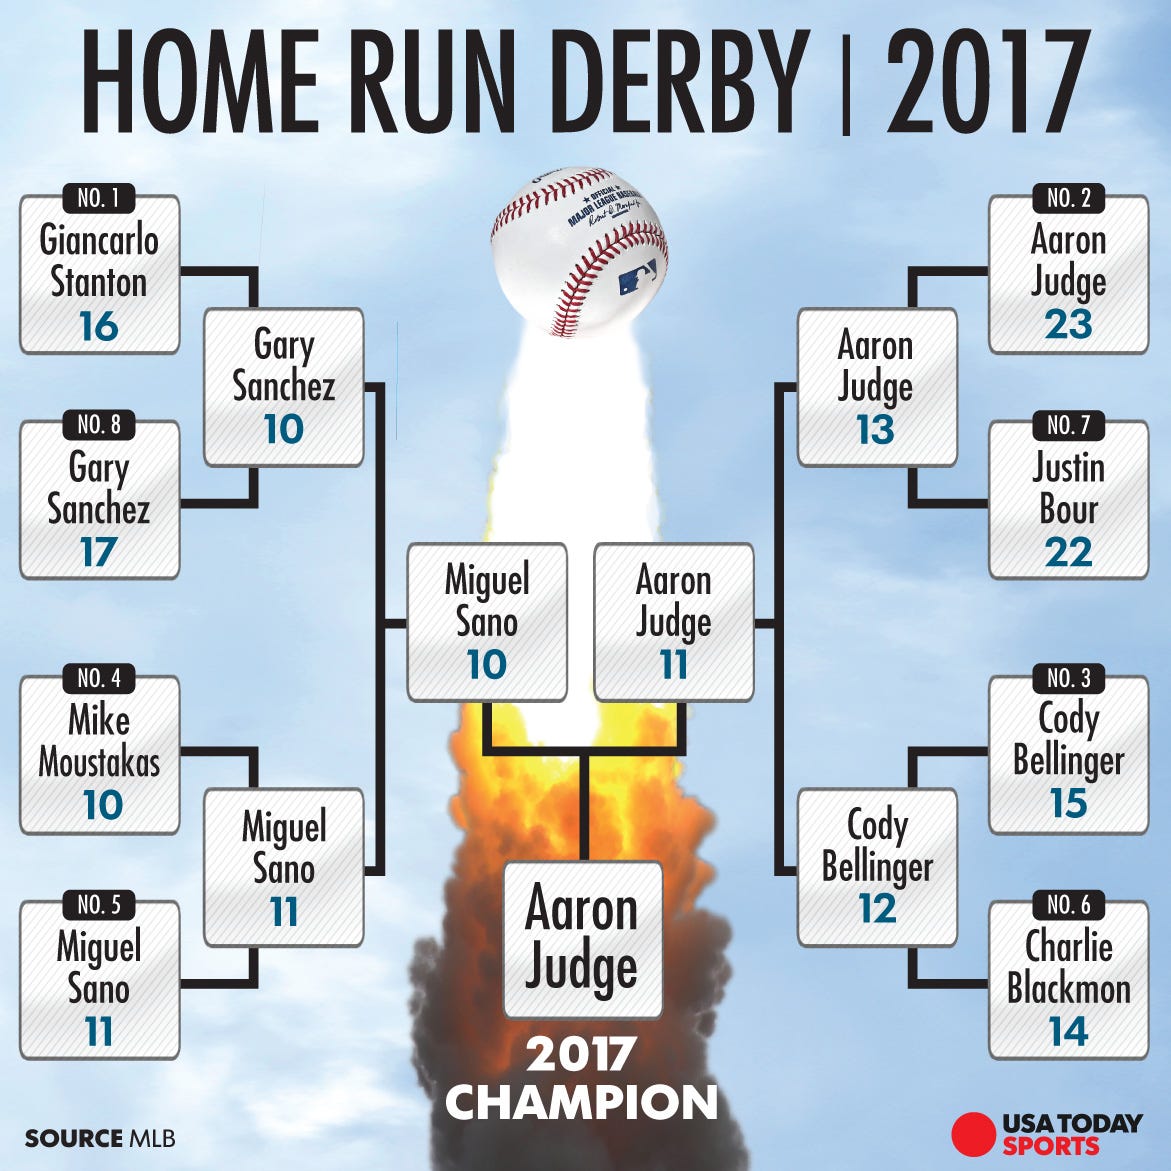 Aaron Judge wins 2017 Home Run Derby